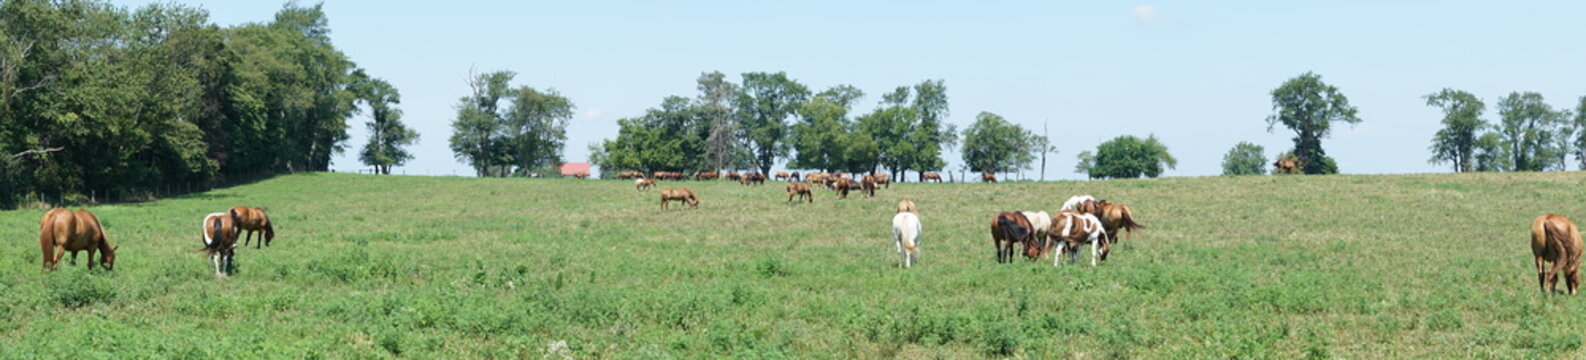 A herd of horses on a farm hill © Vito Natale NJ USA